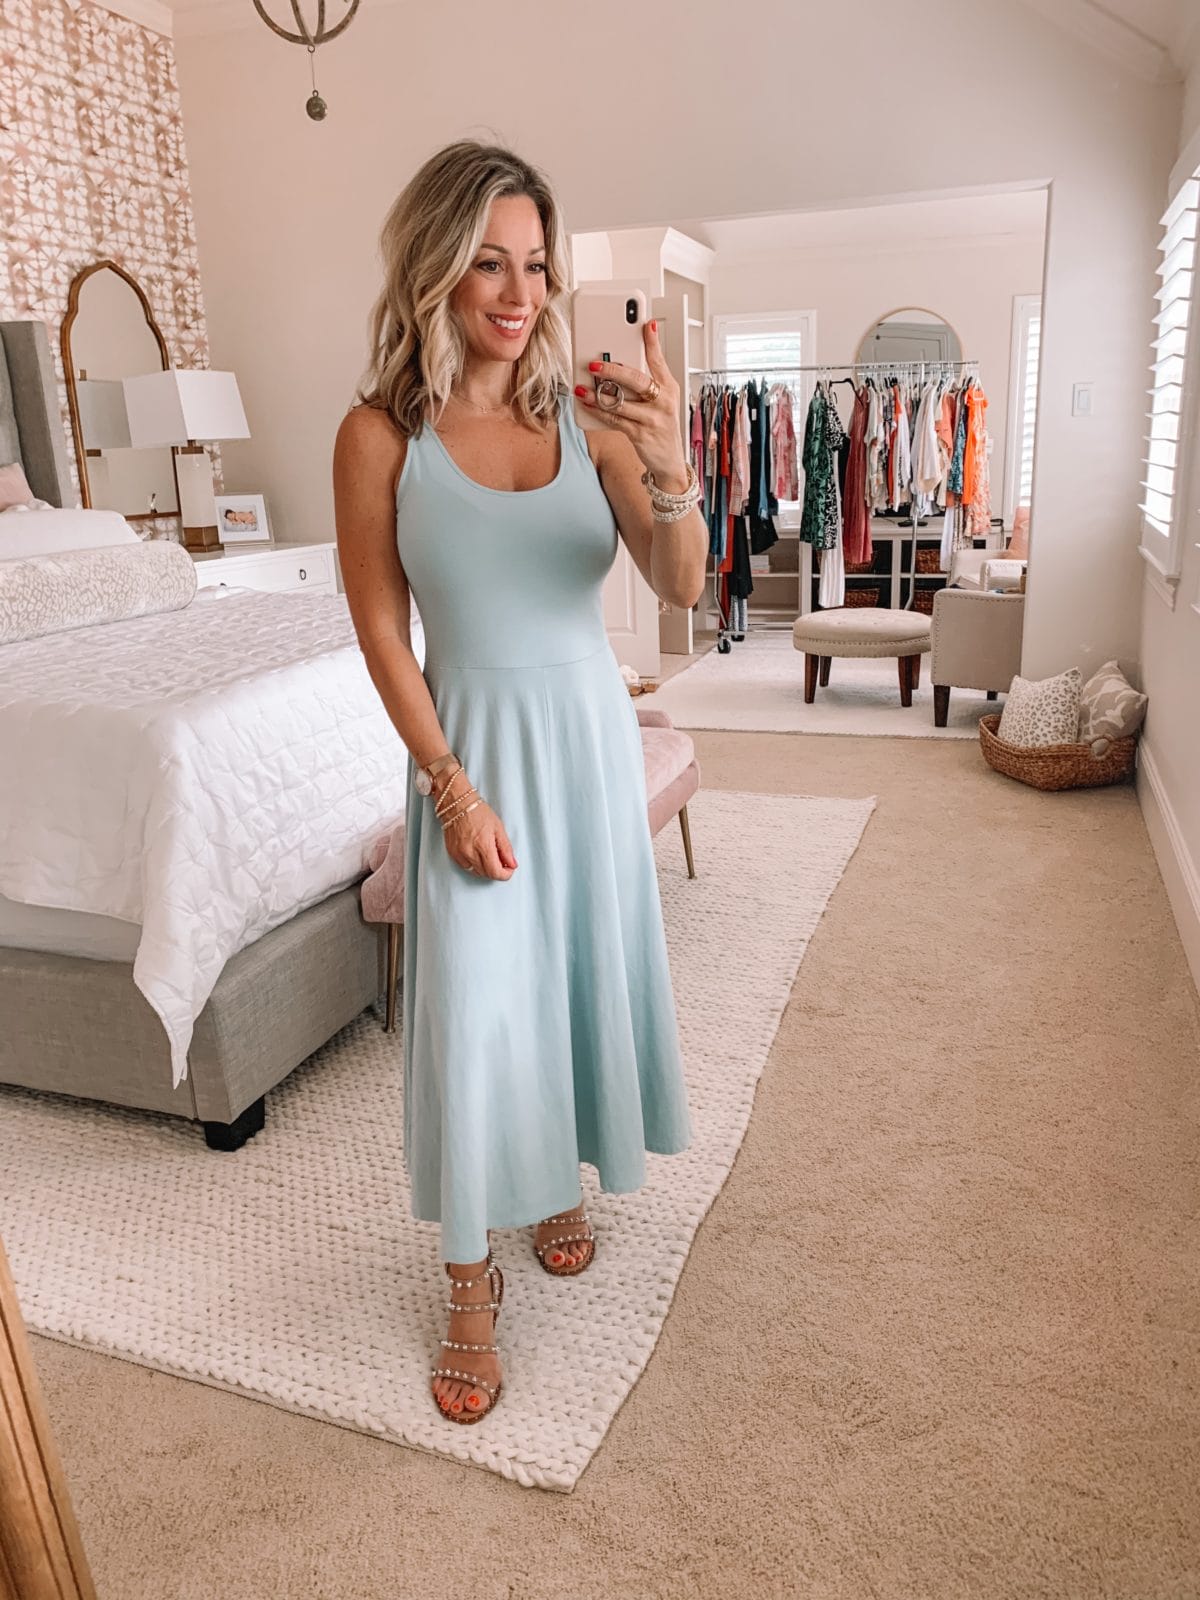 Dressing Room Finds Nordstrom and Target, Blue Tank Maxi Dress, Studded Sandals 